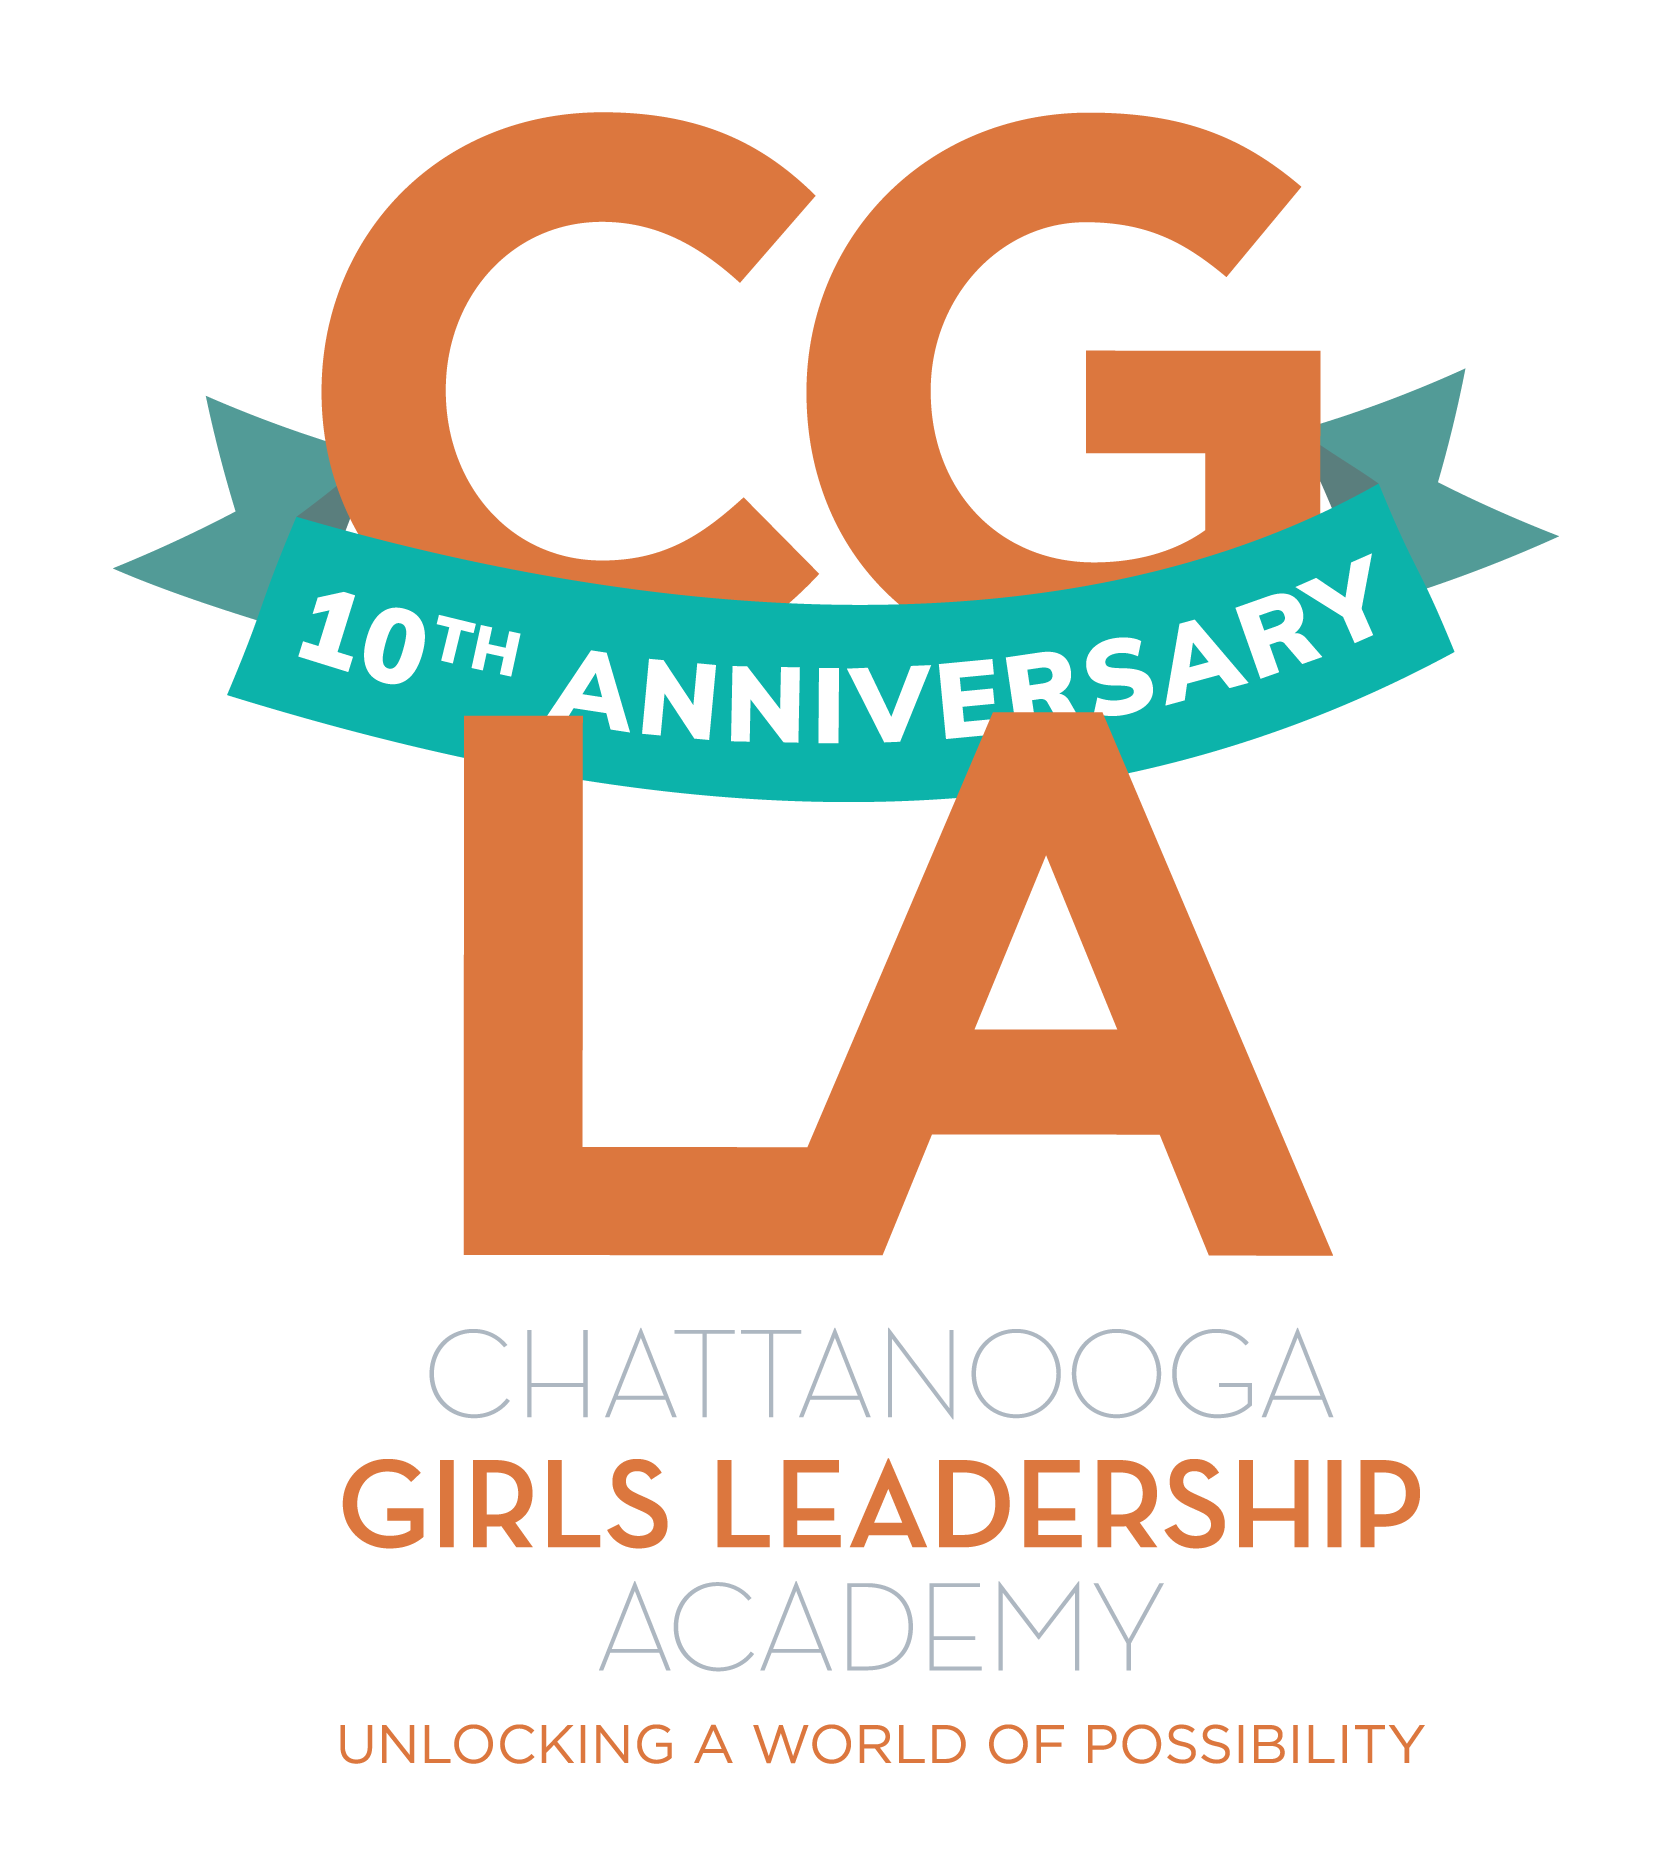 Chattanooga Girls Leadership Academy logo